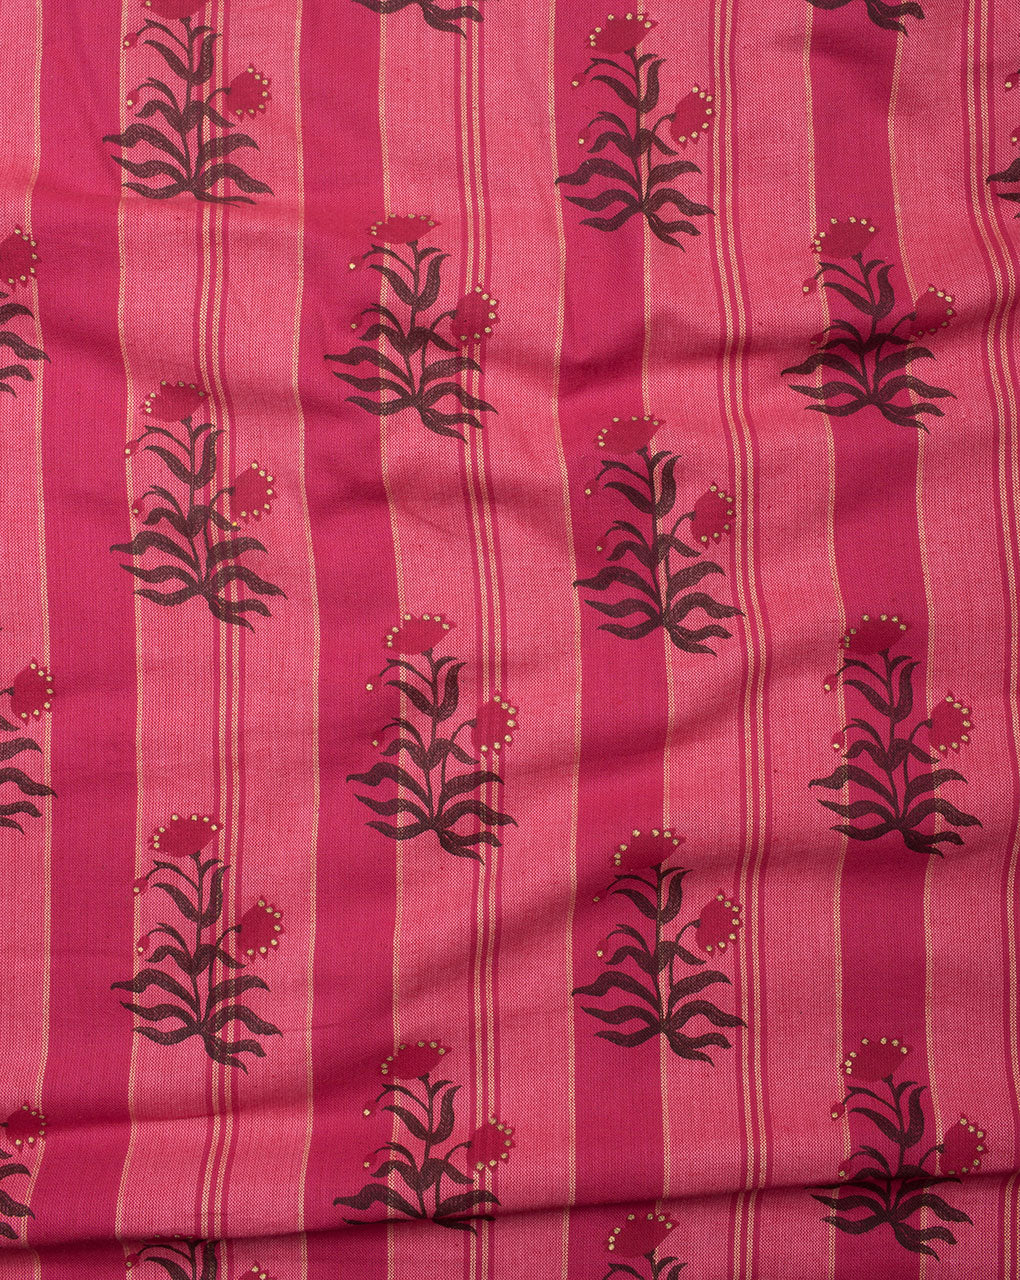 Foil Screen Print Loom Textured Cotton Fabric - Fabriclore.com